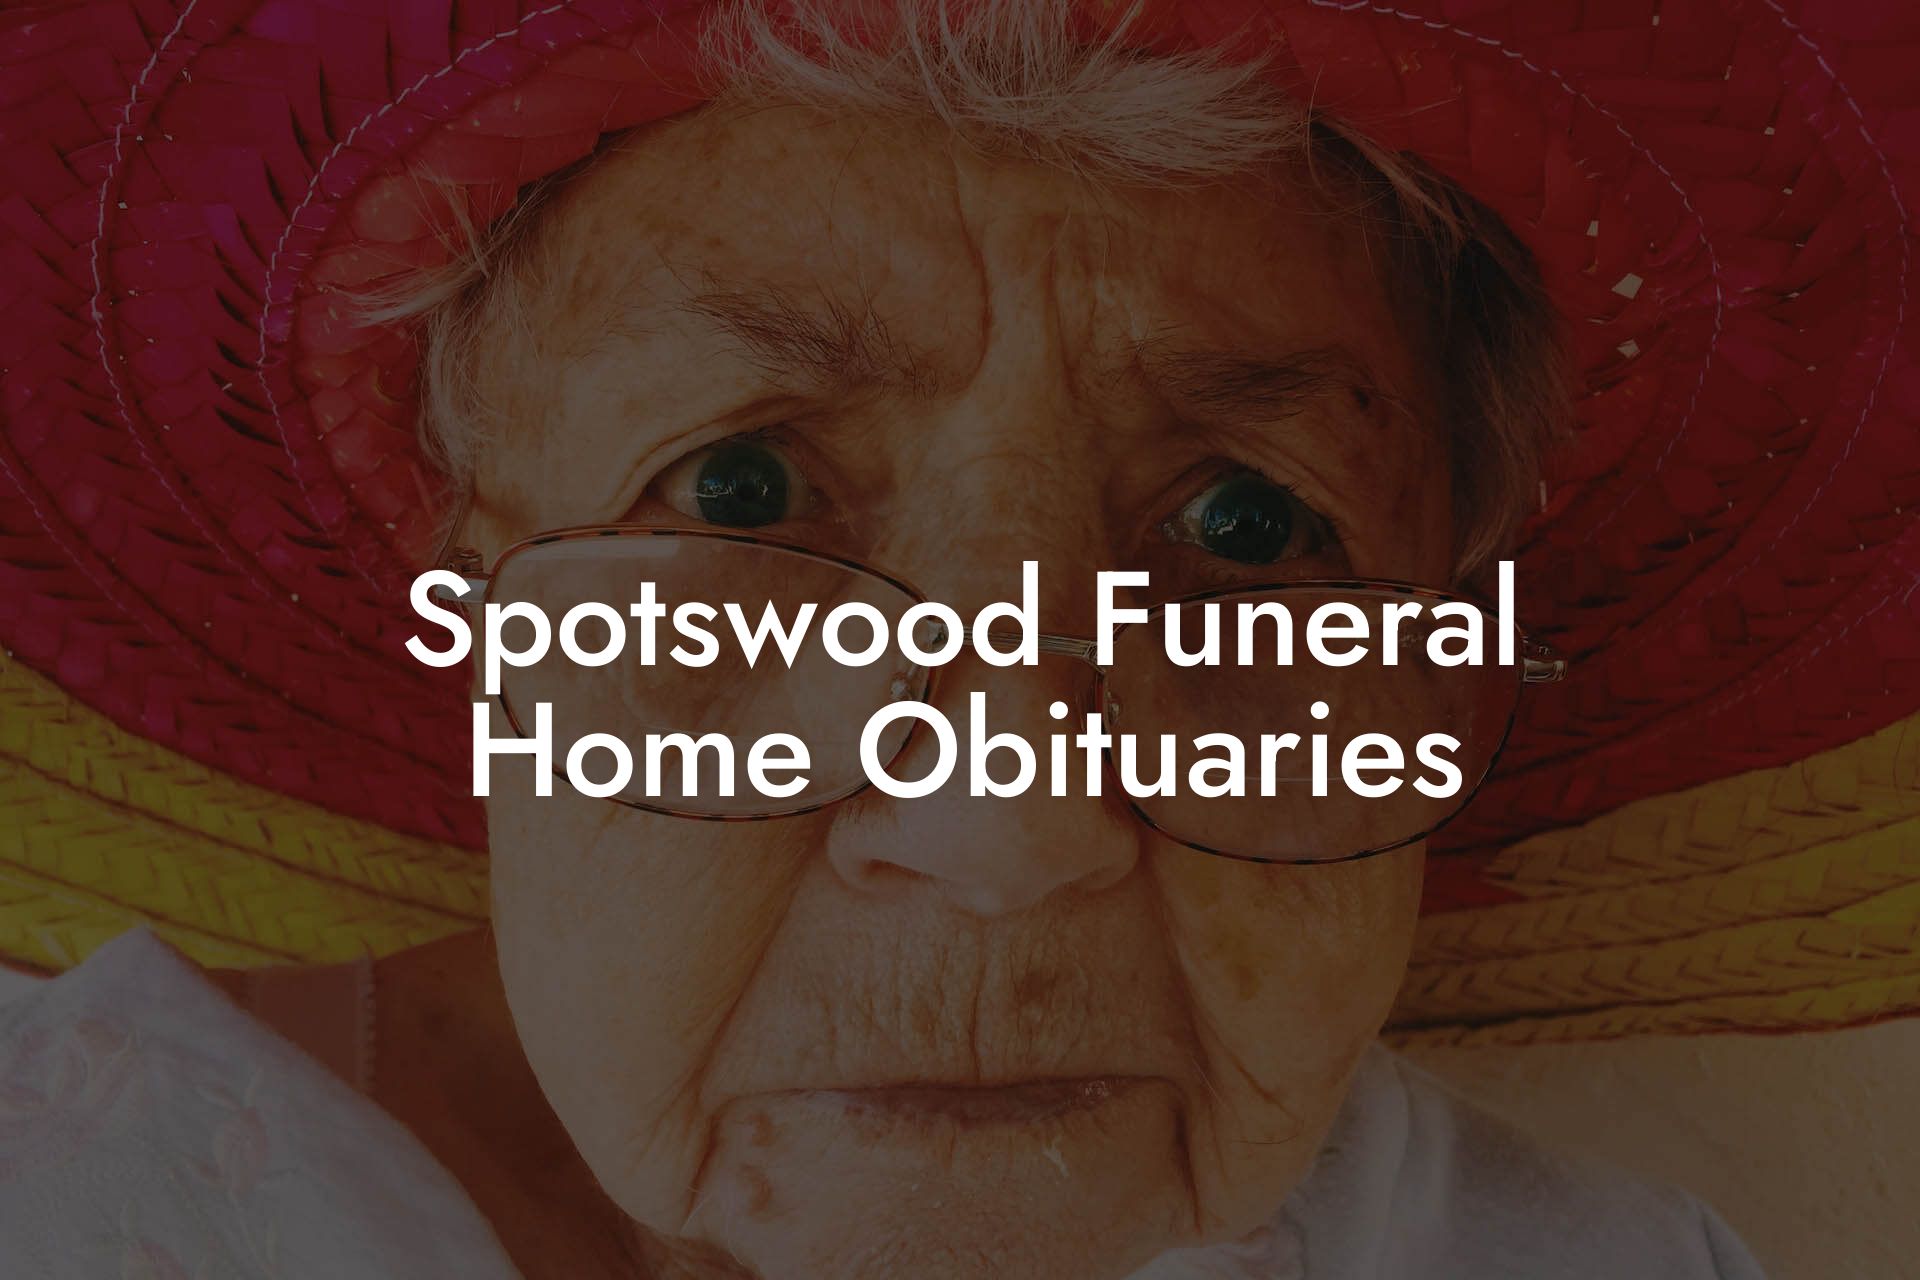 Spotswood Funeral Home Obituaries